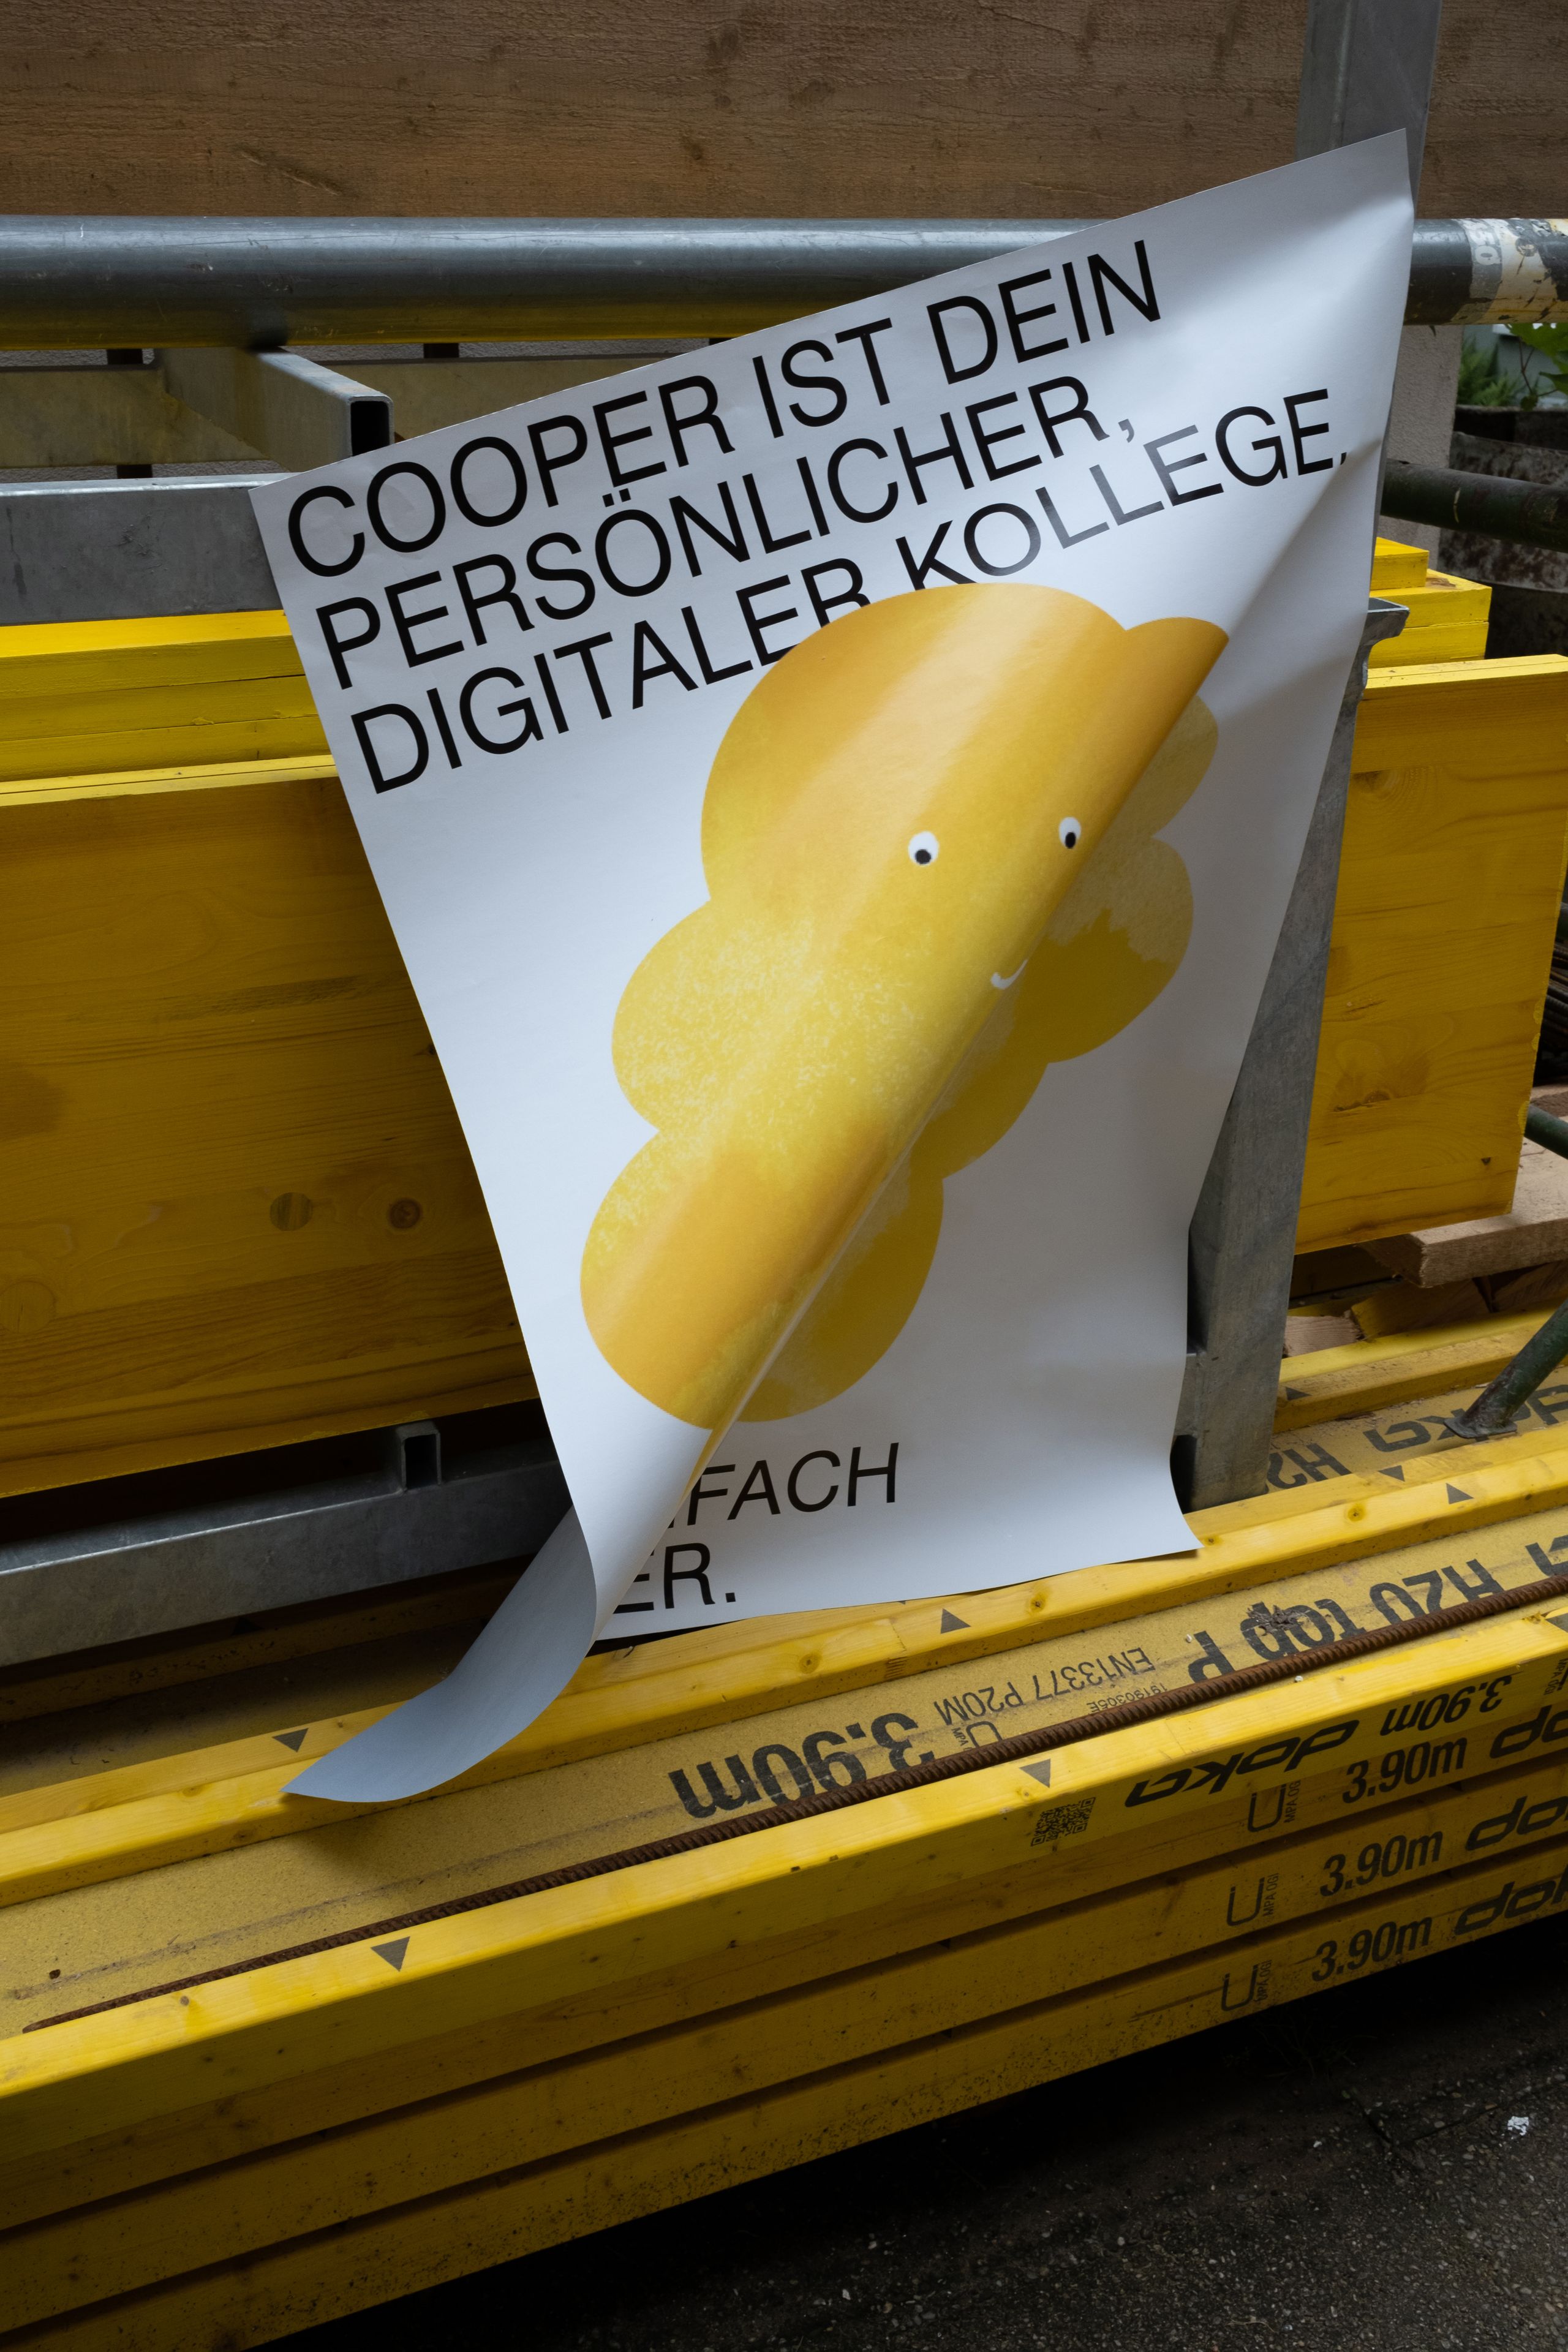 Raiffeisenlandesbank Cooper Poster 2